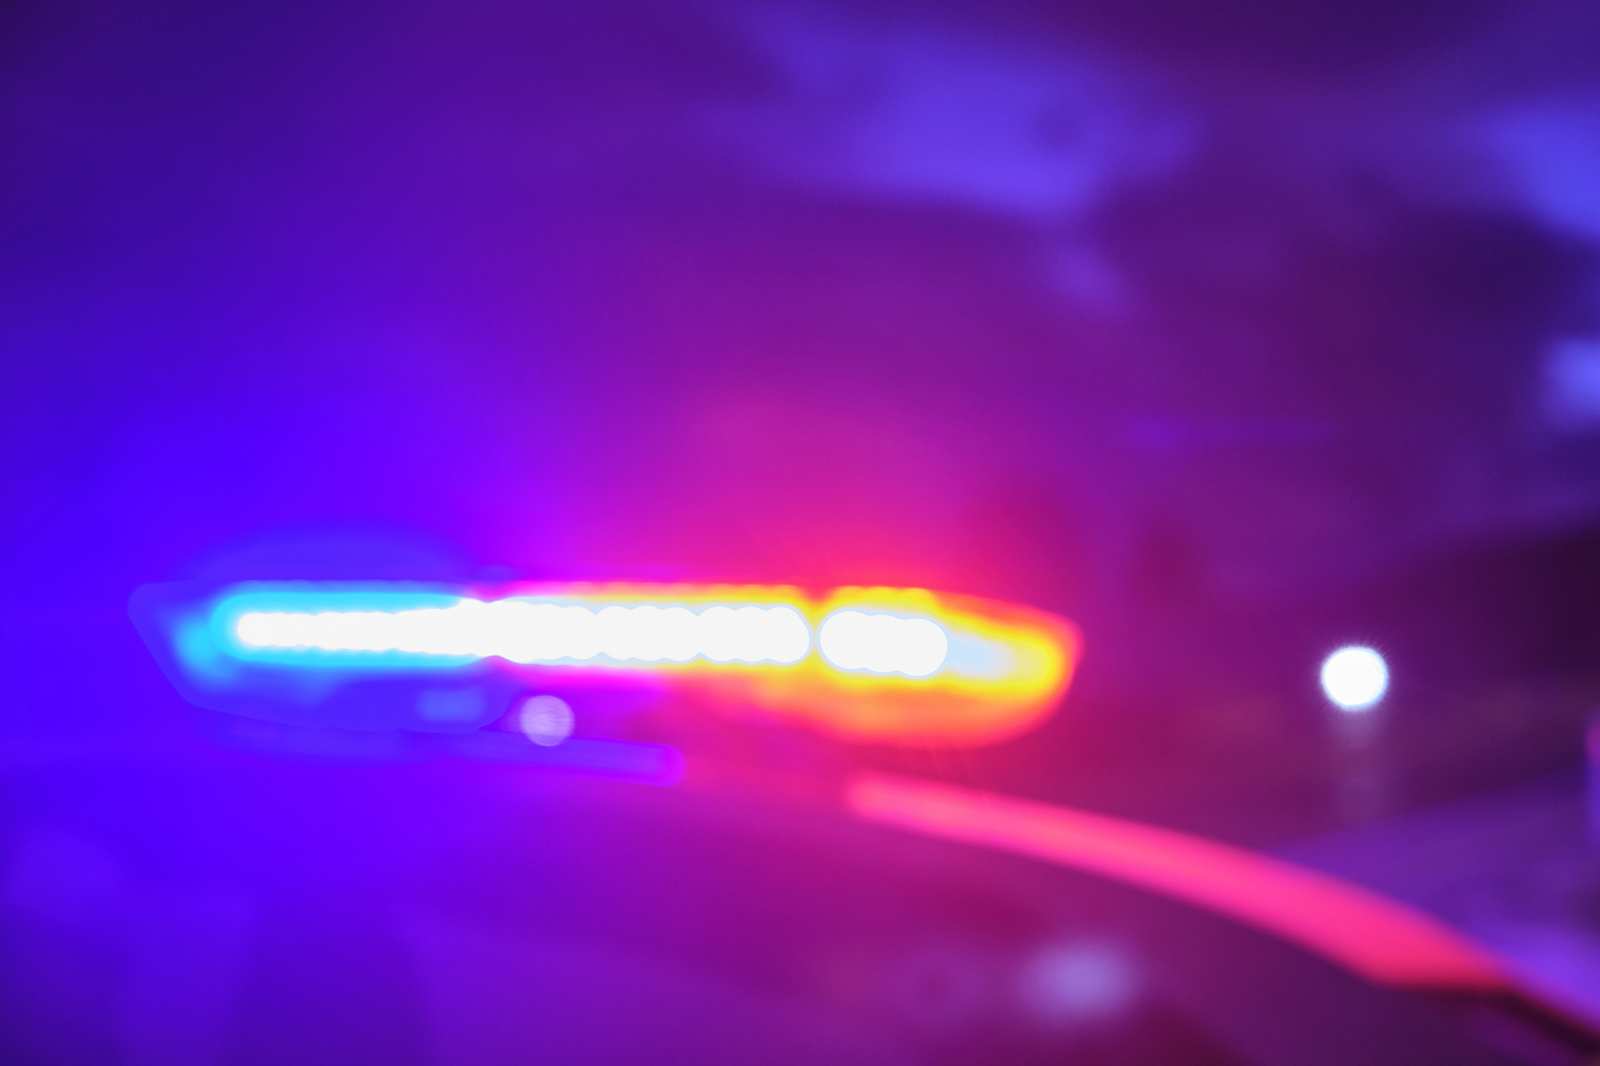 BC CRASH DECAPITATIONS DMT | Nashville police release bodycam footage of transgender school shooter takedown | The Paradise